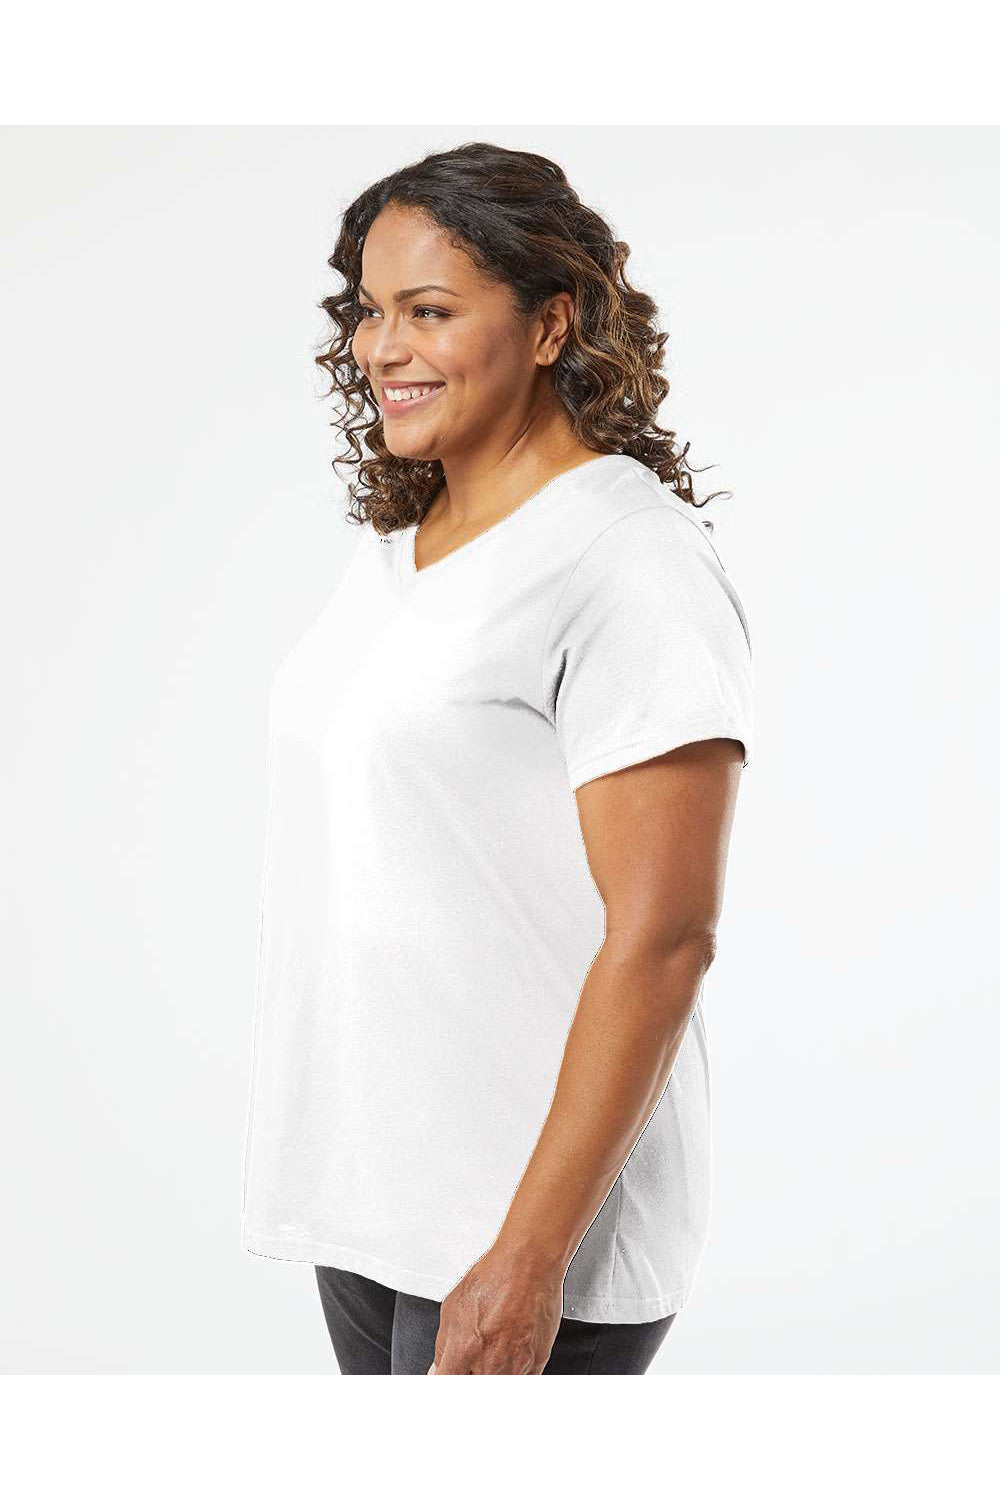 LAT 3817 Womens Curvy Collection Fine Jersey Short Sleeve V-Neck T-Shirt Blended White Model Side